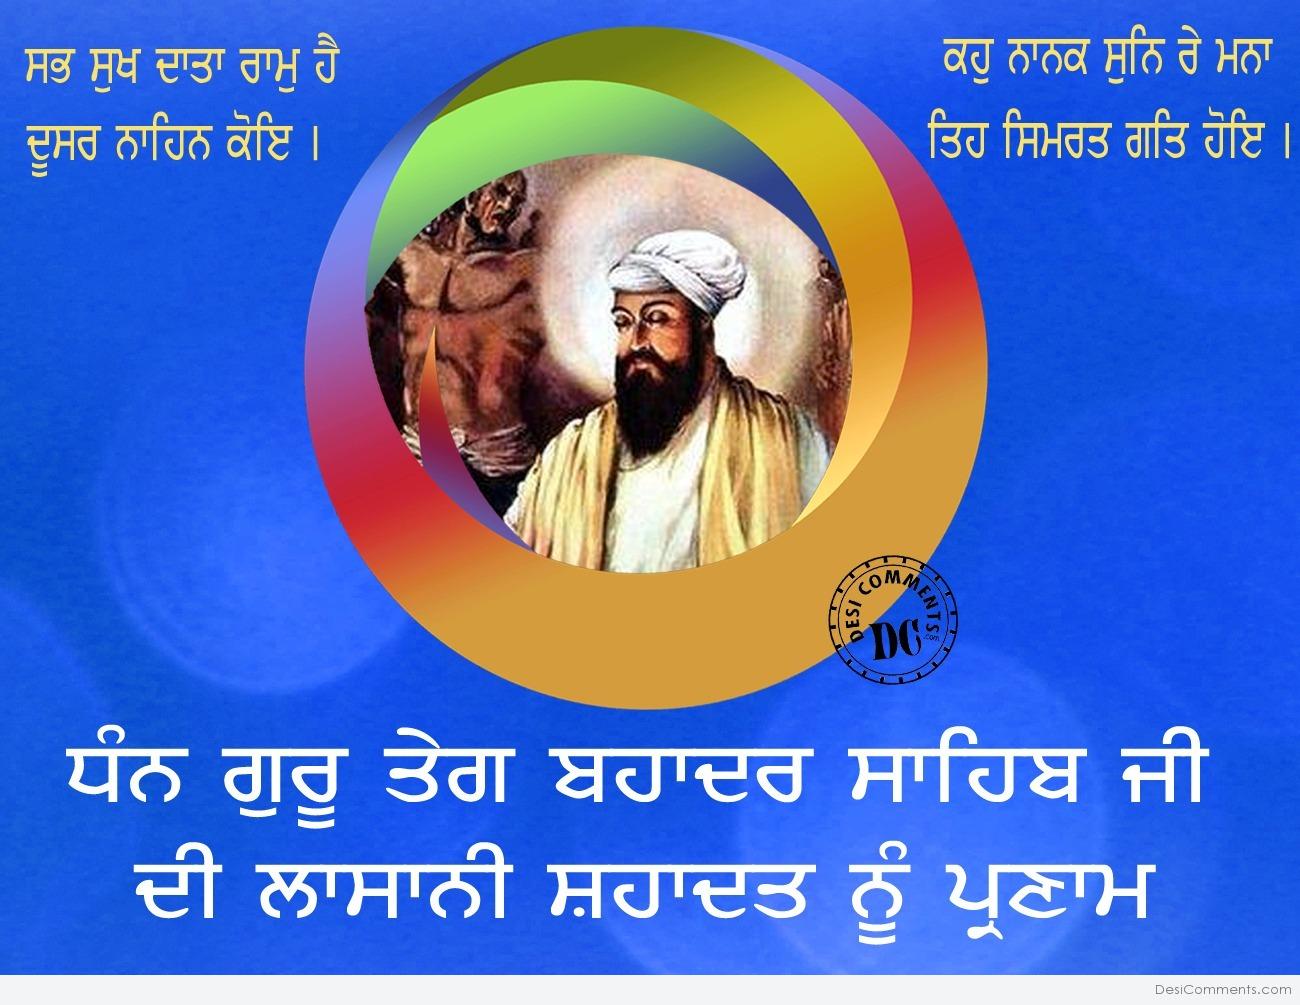 Guru Tegh Bahadur ji Facts, Quotes, Sayings, Slogan, Whatsapp Status